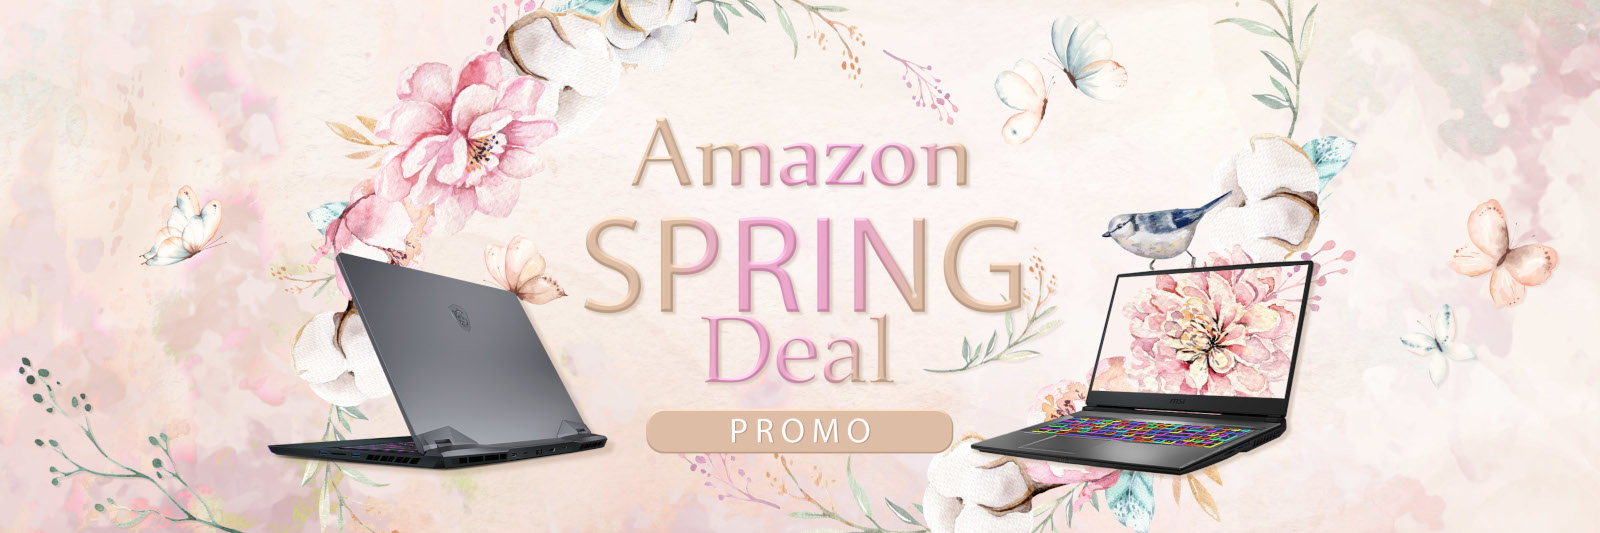 Amazon MSI Spring Deals I 2ba22